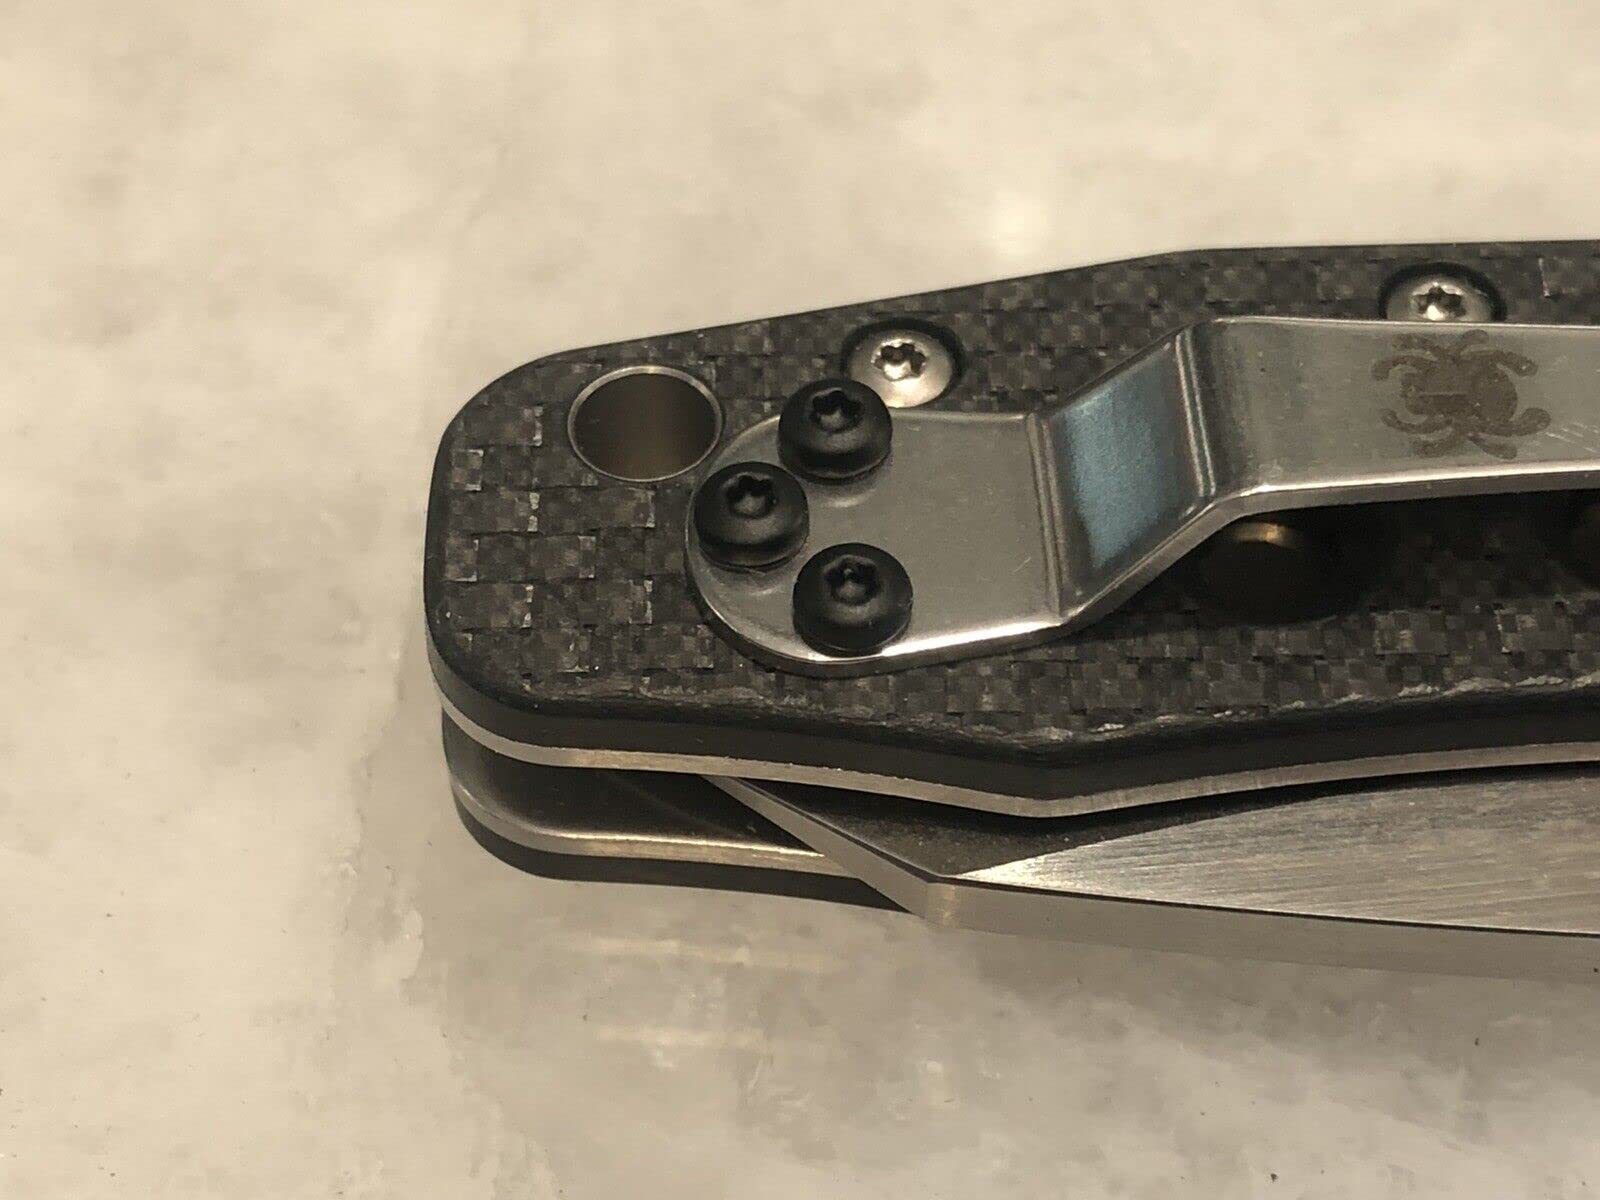 Black Stainless Torx Screws For Spyderco Smock Knife Pocket Clip - 3pcs